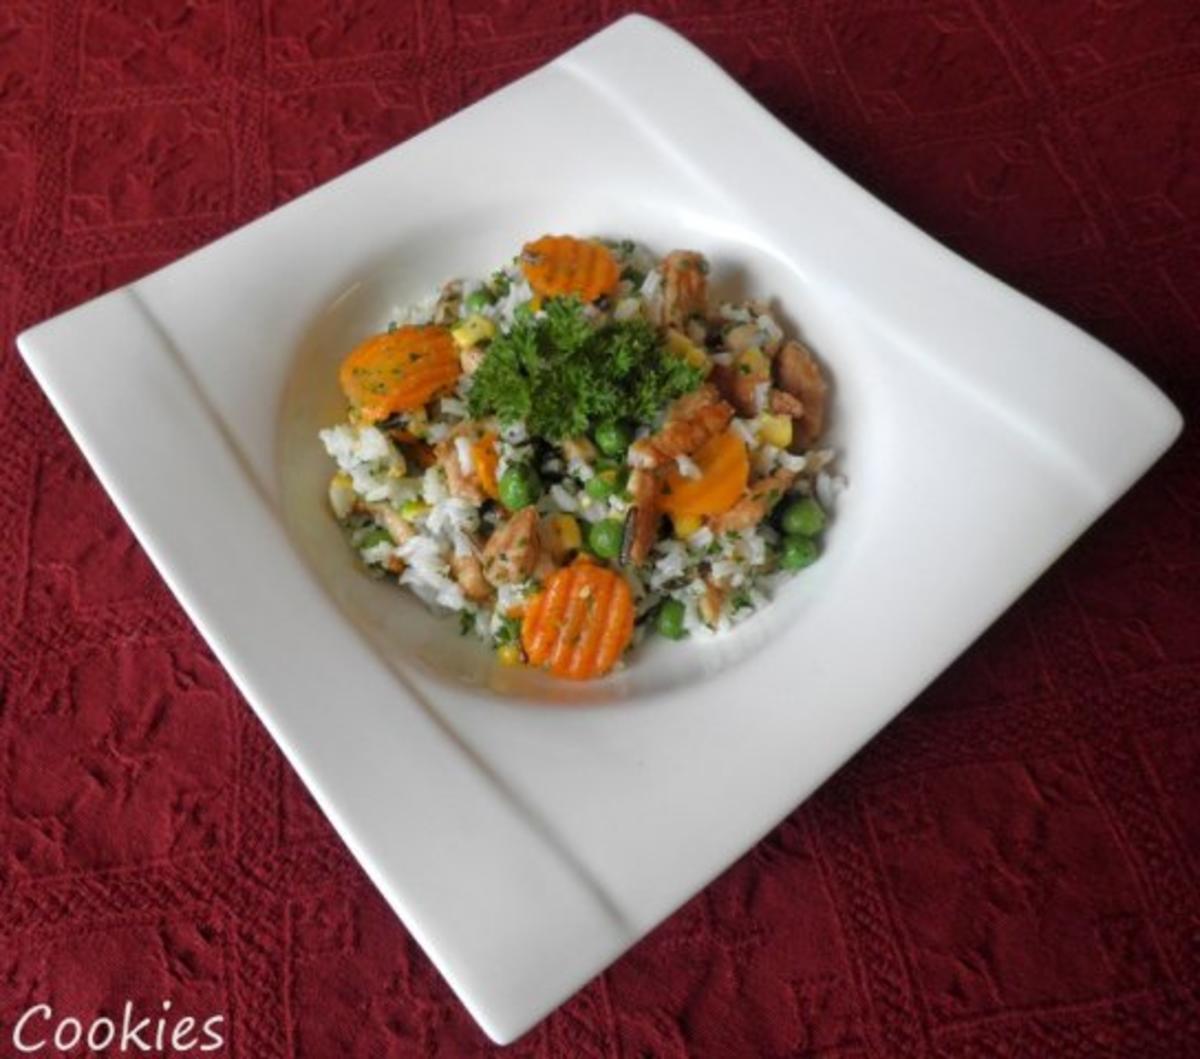 Hahnchen Gemuse Reis Rezept Mit Bild Kochbar De